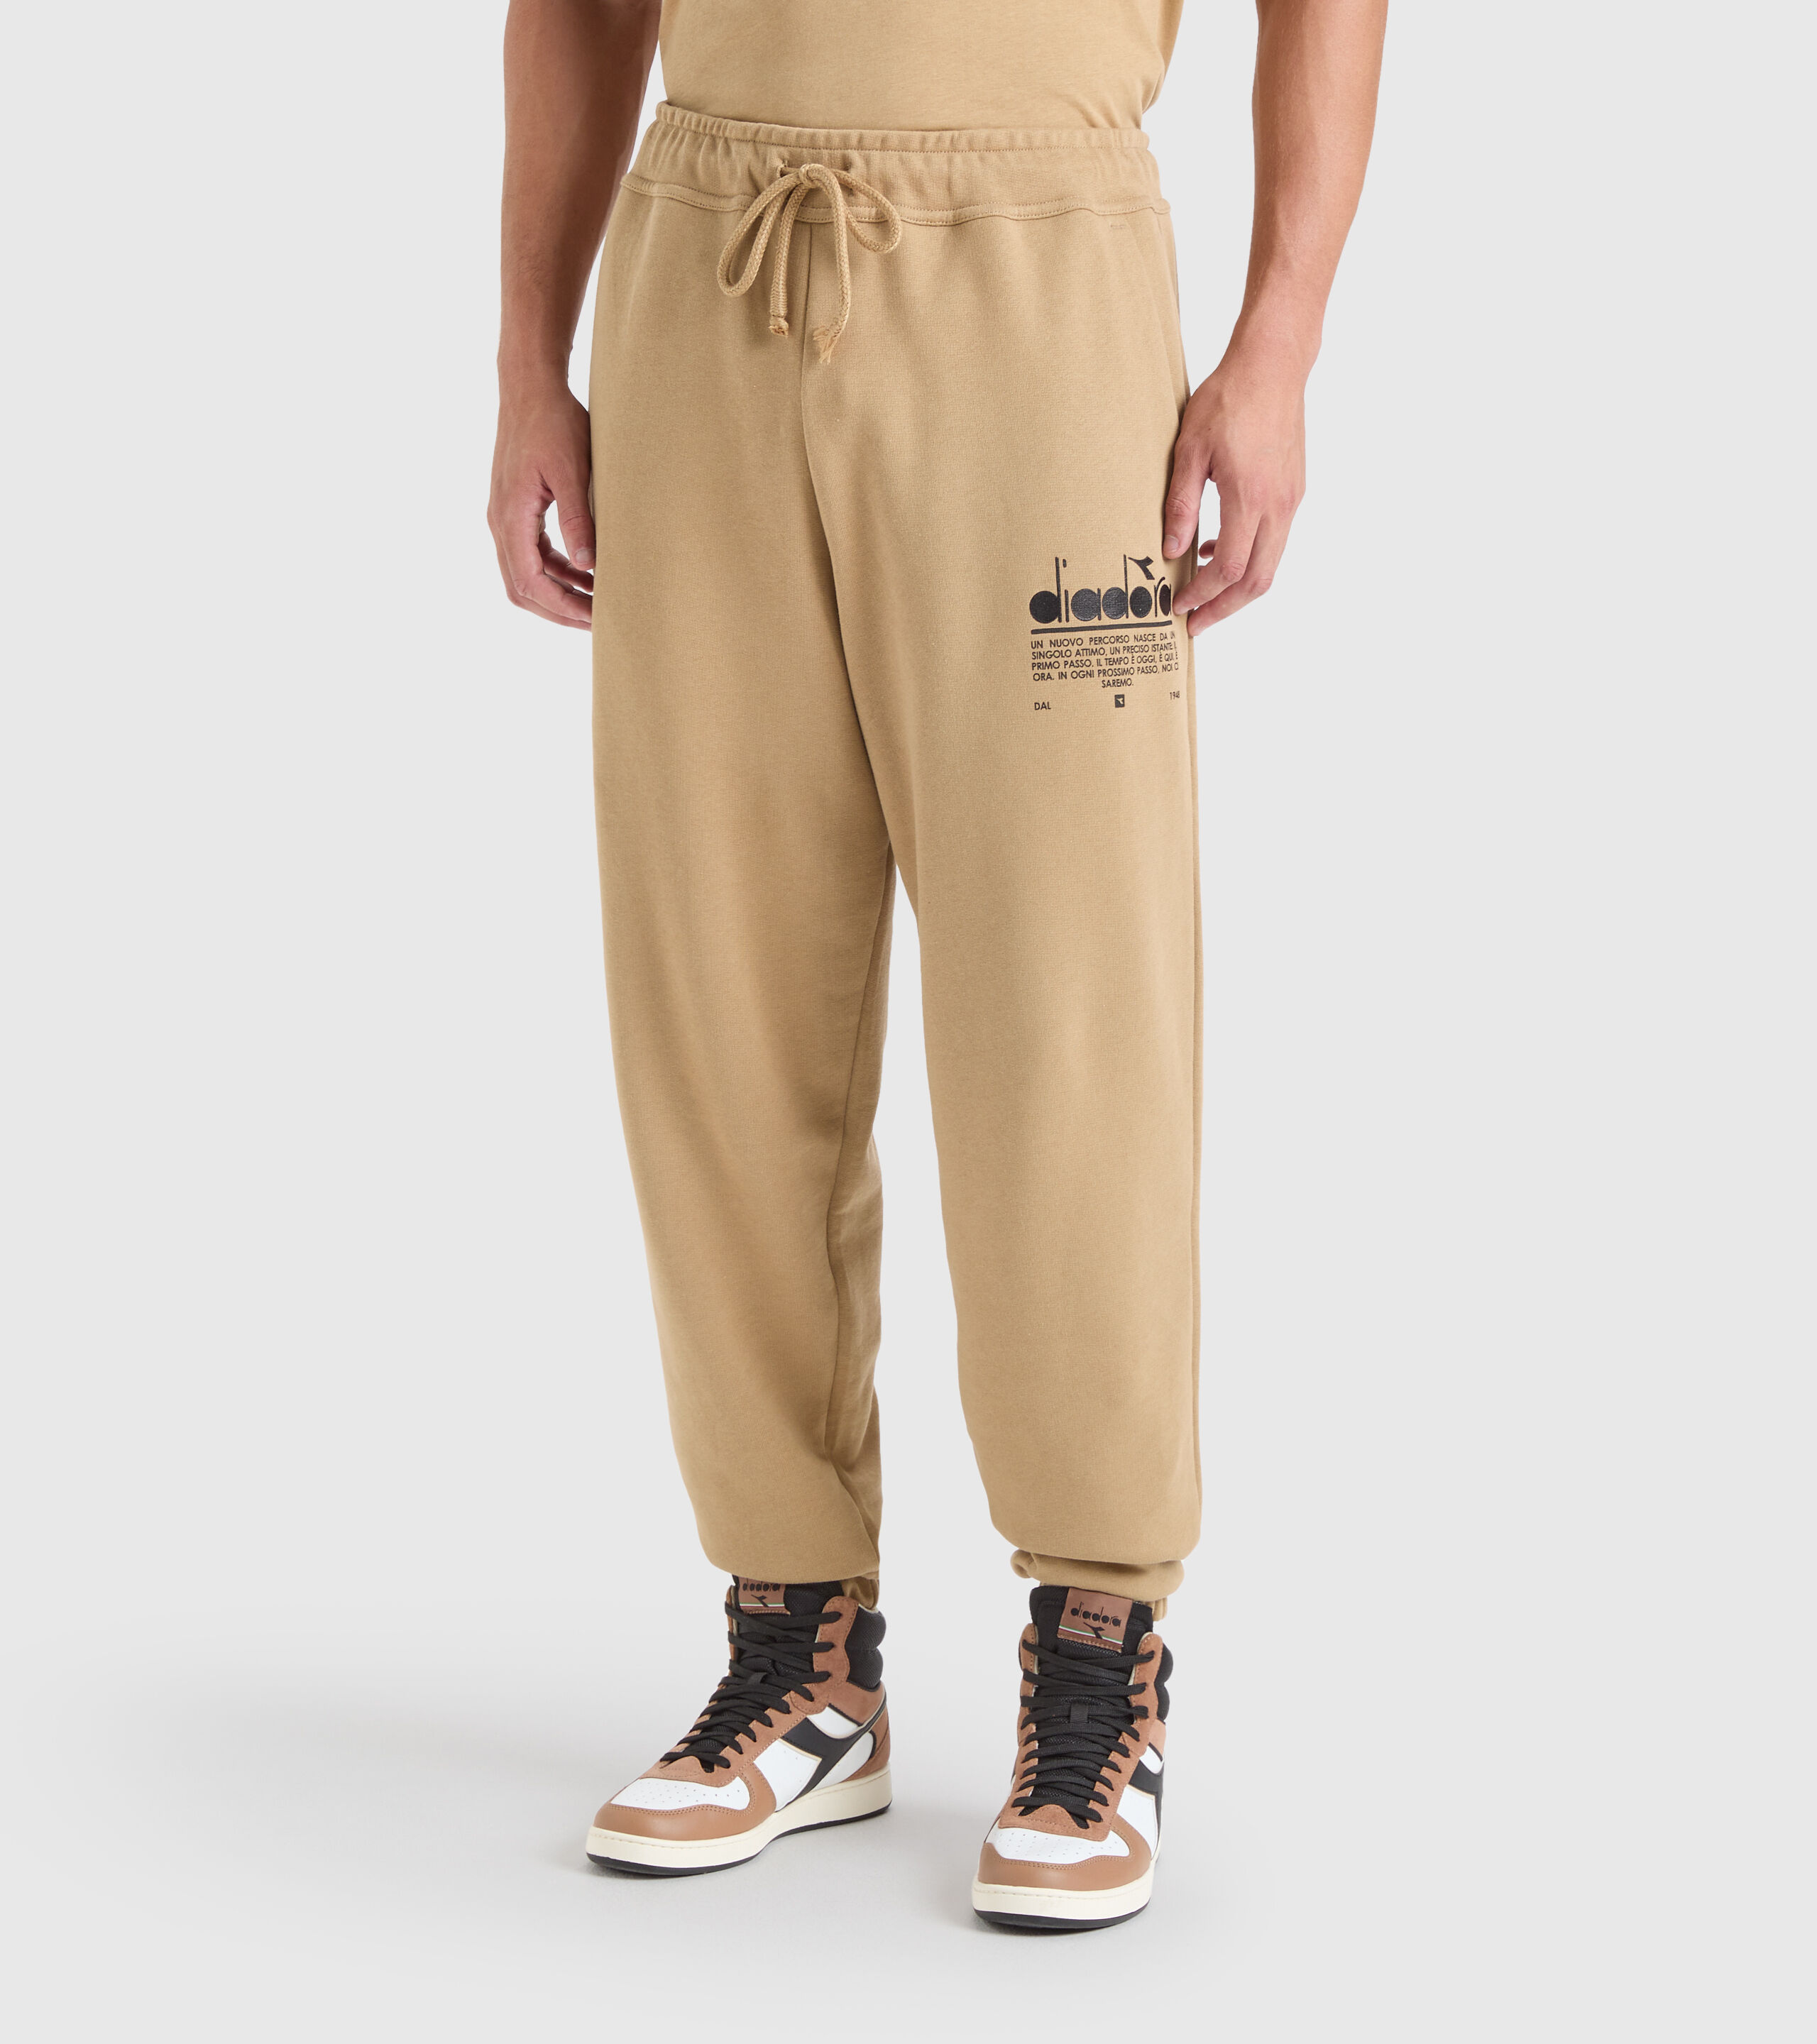 Sweatpants Pants Jogging Bottoms Trousers Combat Camouflage Gym Sports Men  Ca | eBay